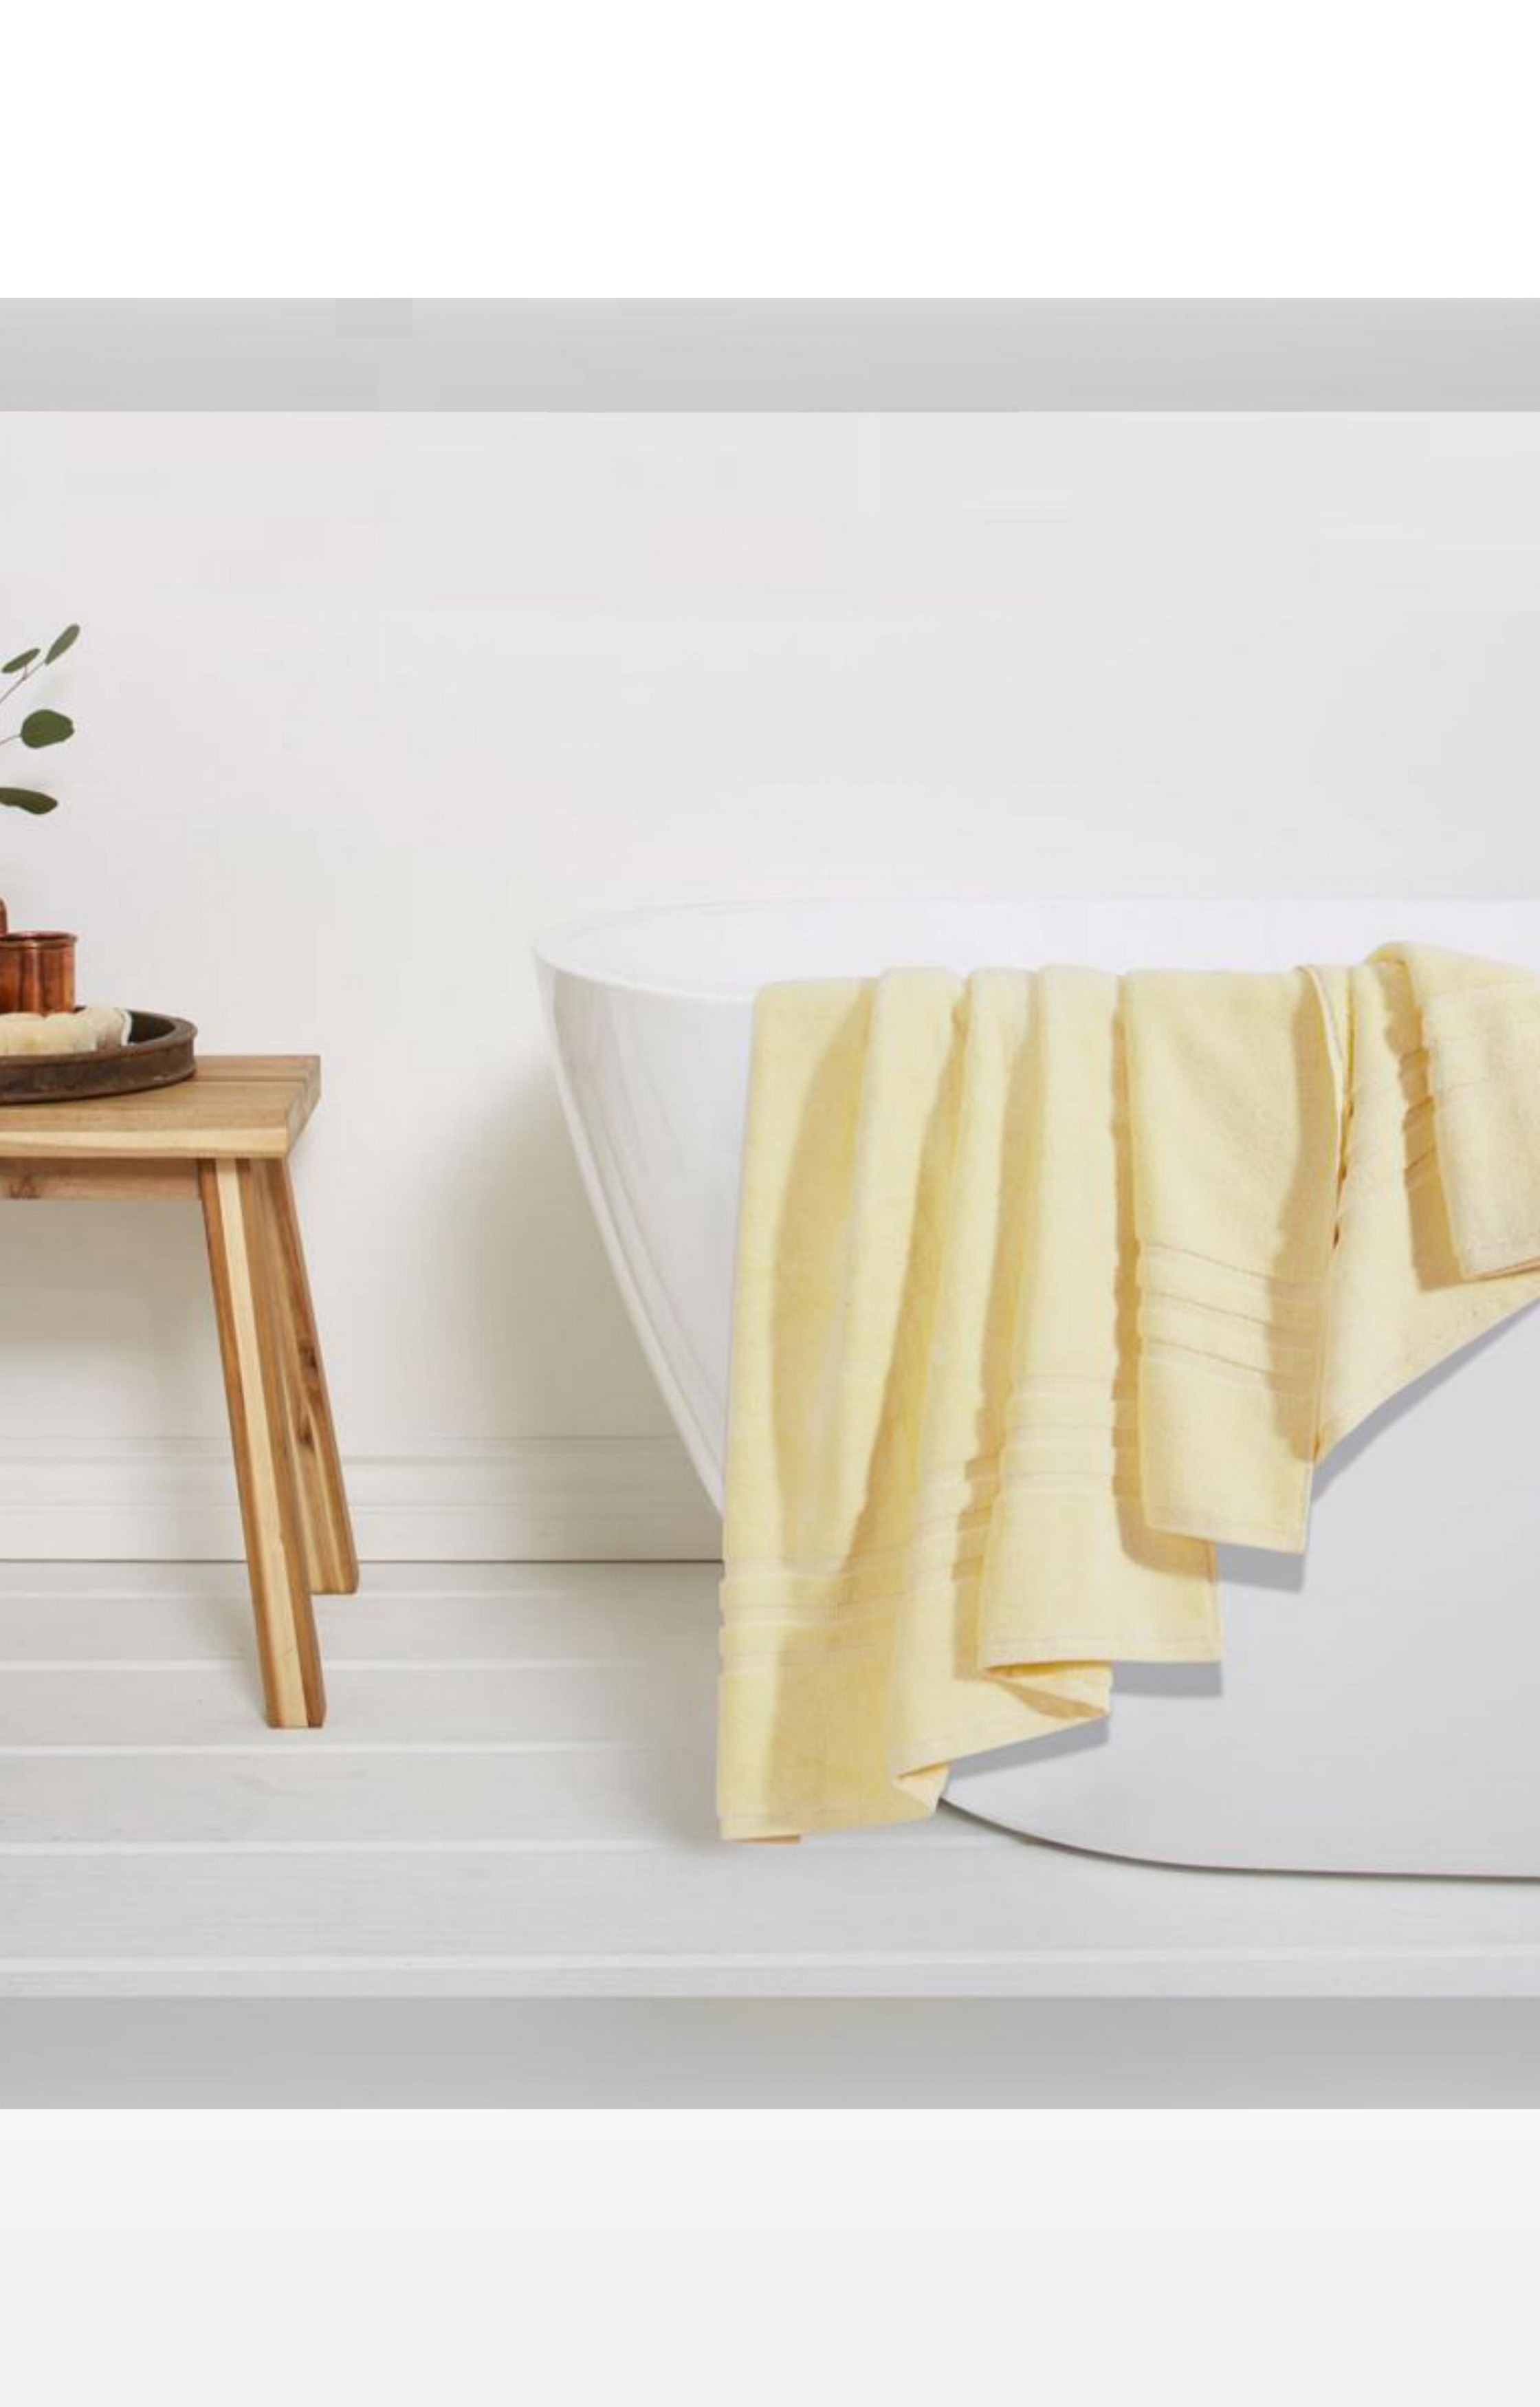 Sita Fabrics | Sita Fabrics Premium Cotton Super Soft Zero Twist Yarn Very Airy 600 GSM Bath Towel - Yellow